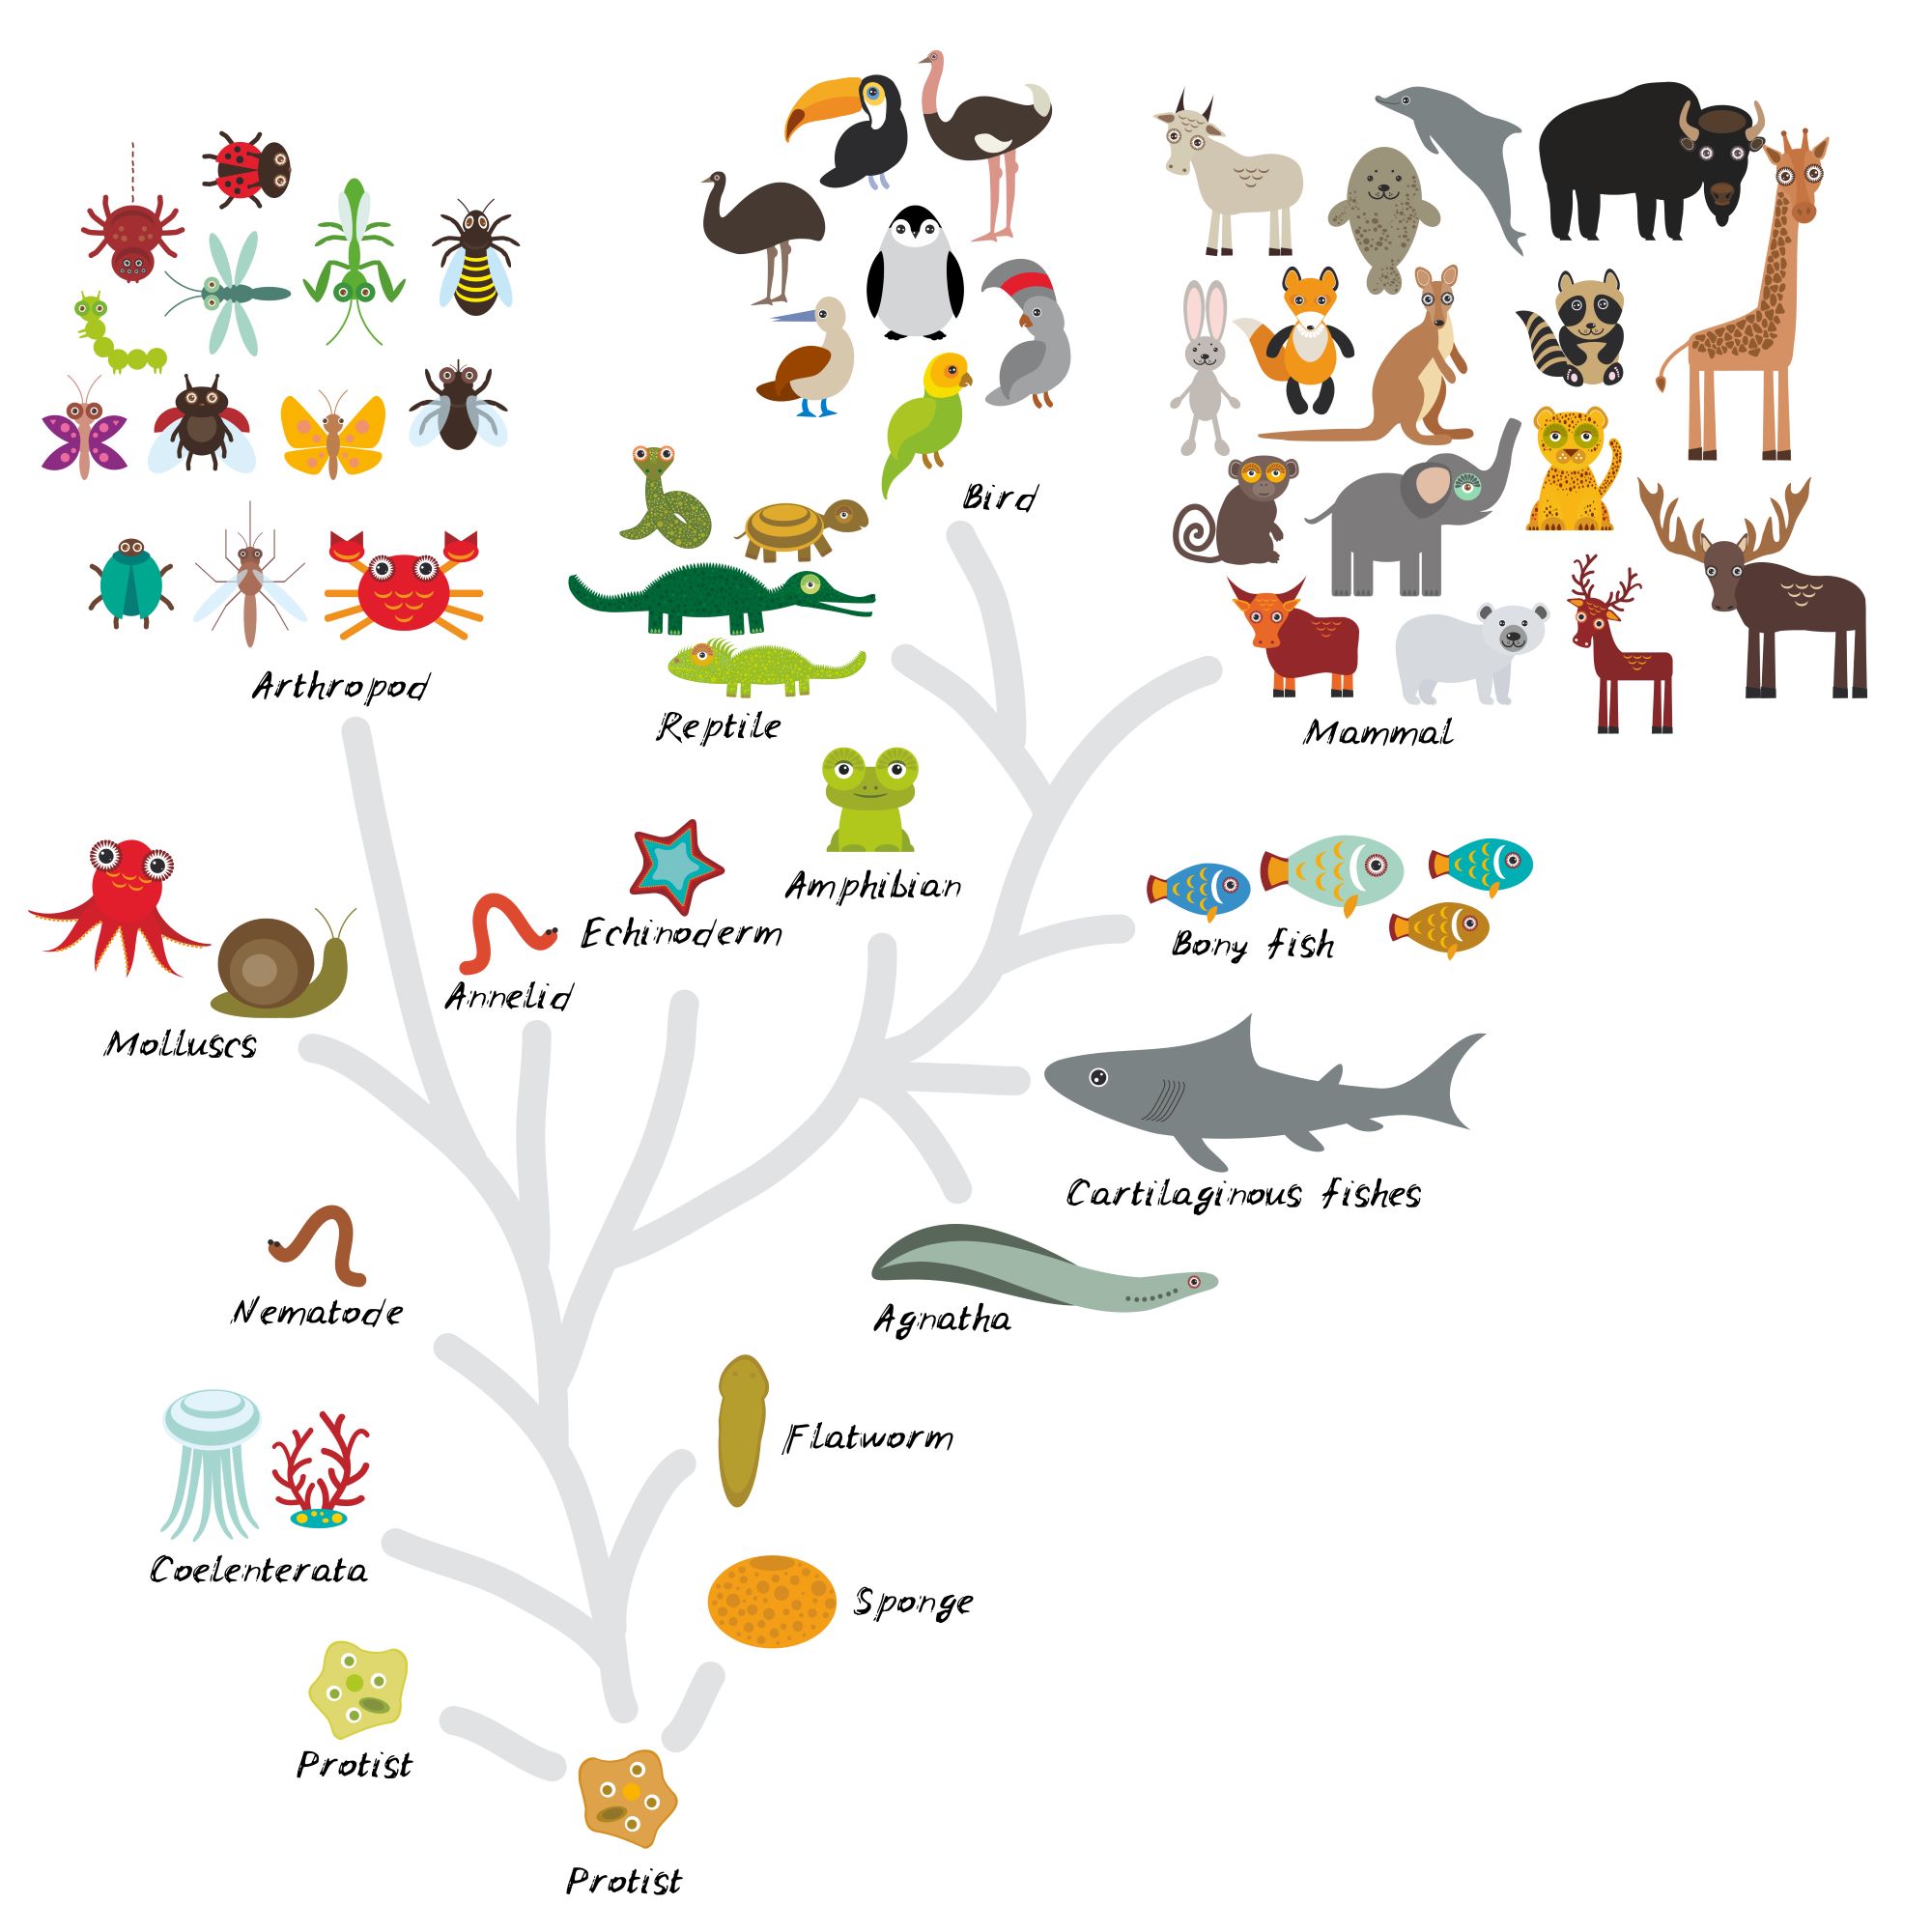 Animal Classification Chart Kingdom Phylum Class Order Family Genus Species